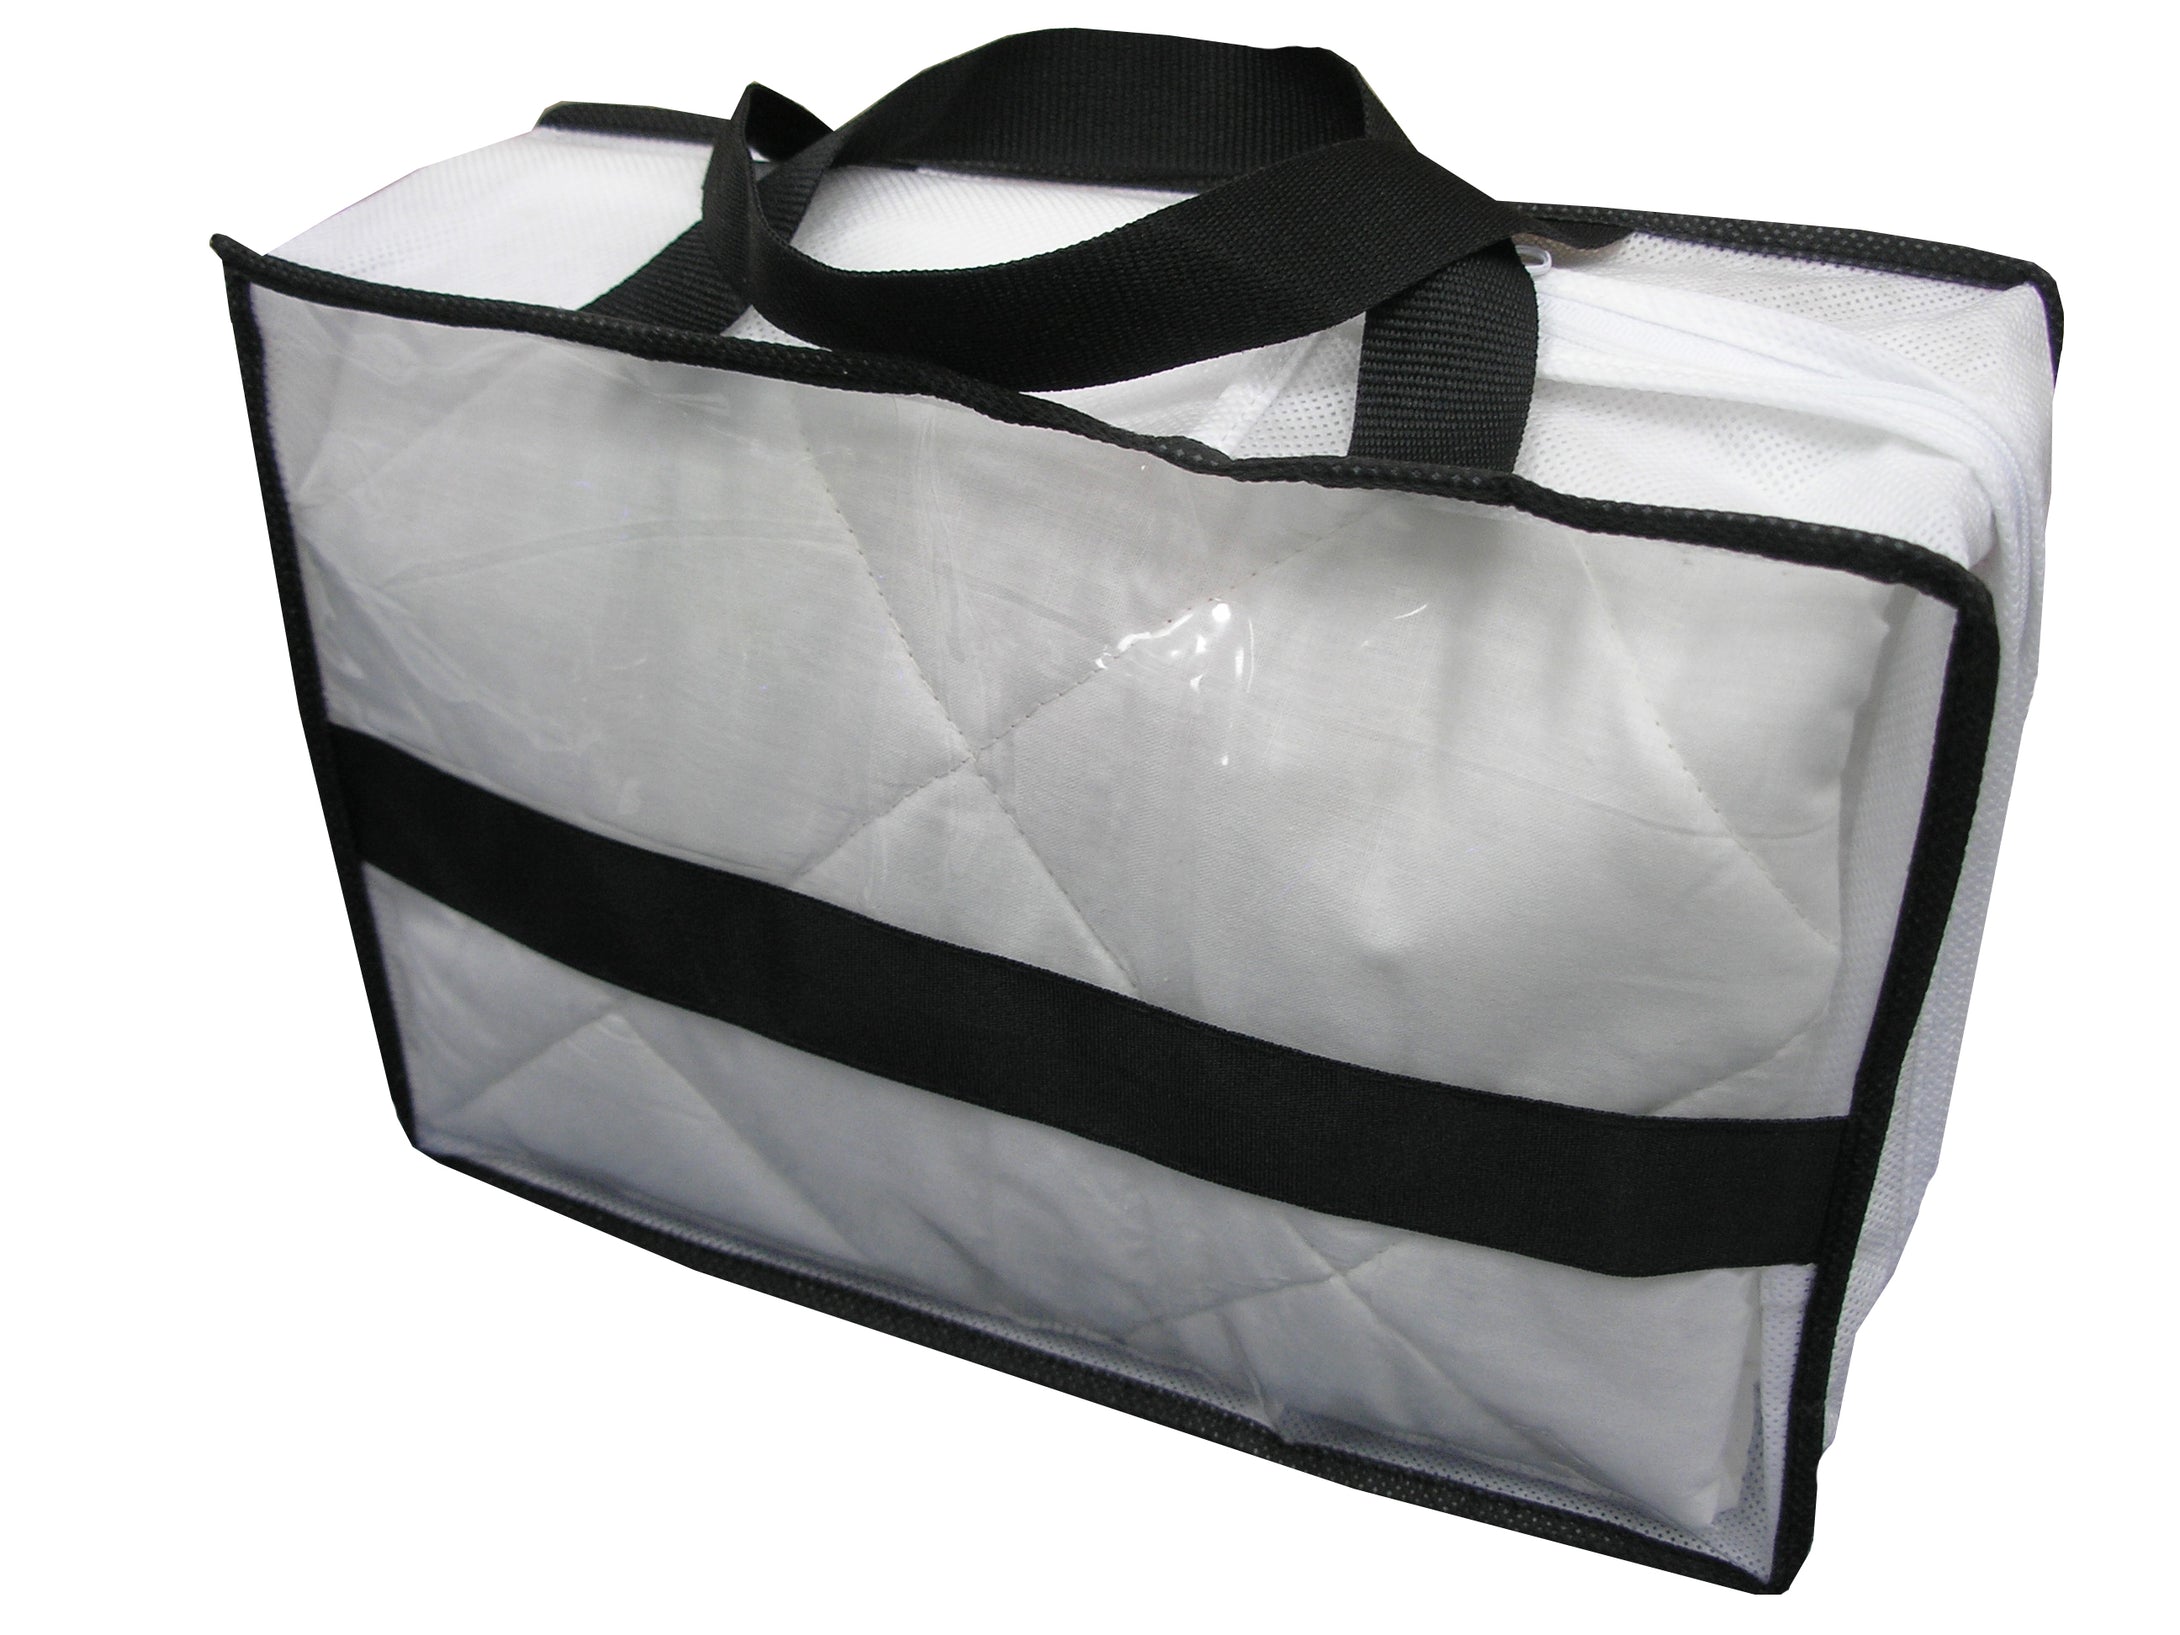 JLSB-0031 Sewn Bag